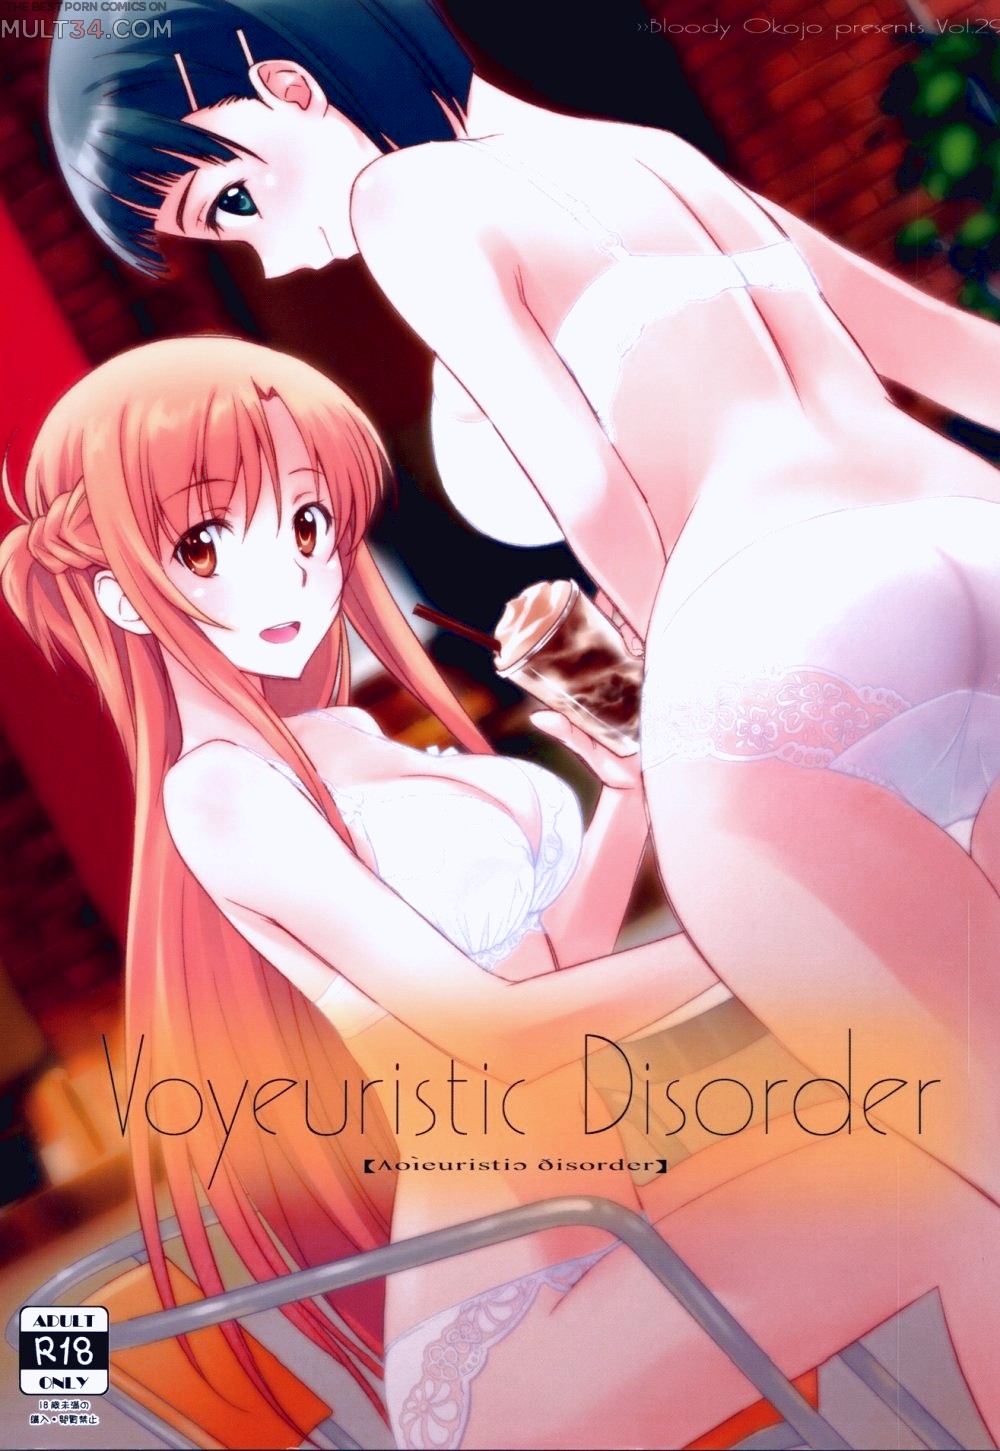 Sword Art Online Yuri - Voyeuristic Disorder hentai manga for free | MULT34